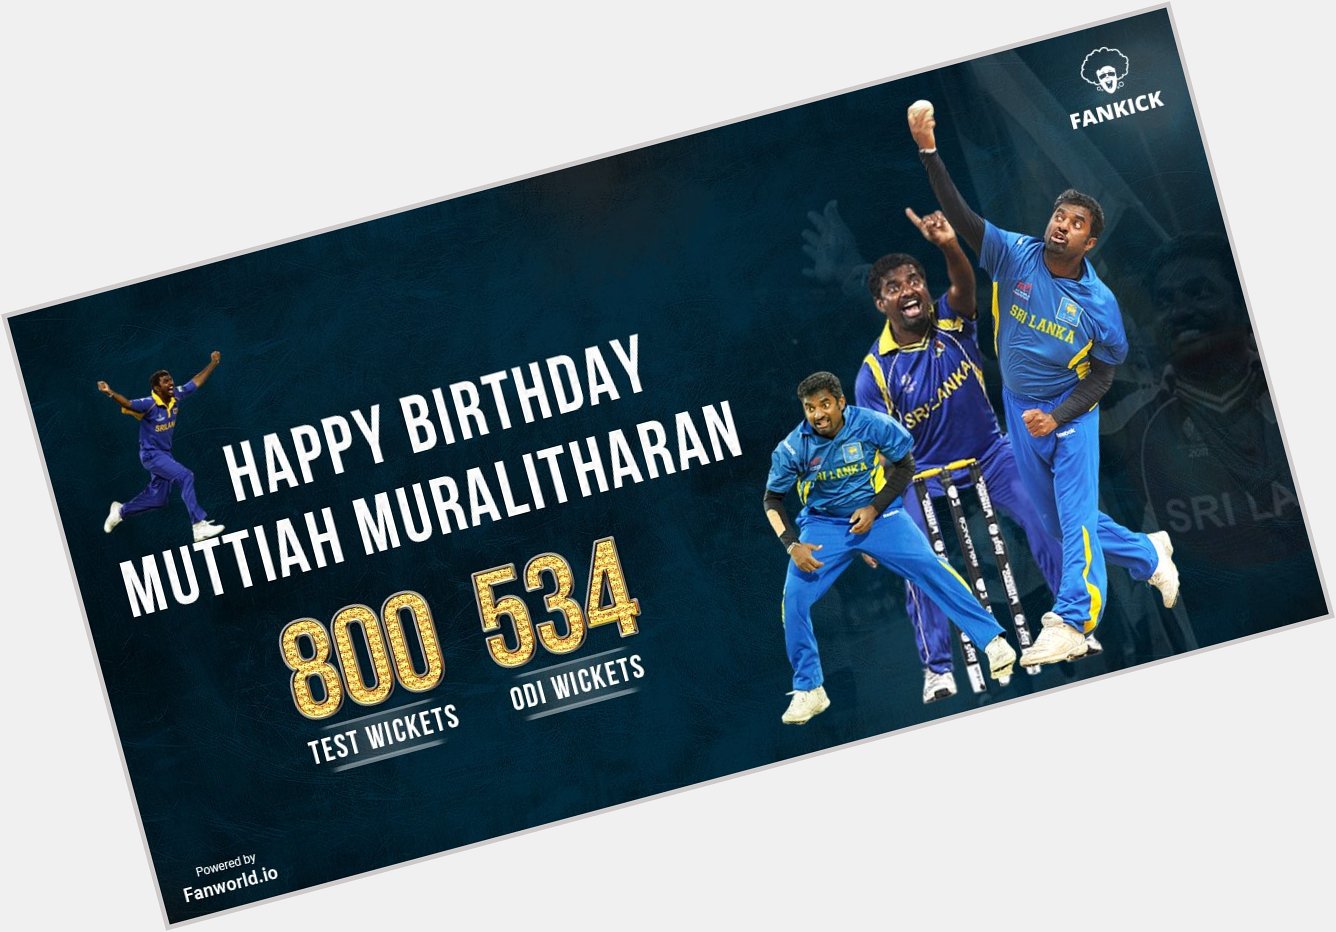 Happy birthday to Sri Lanka legend Muttiah Muralitharan 